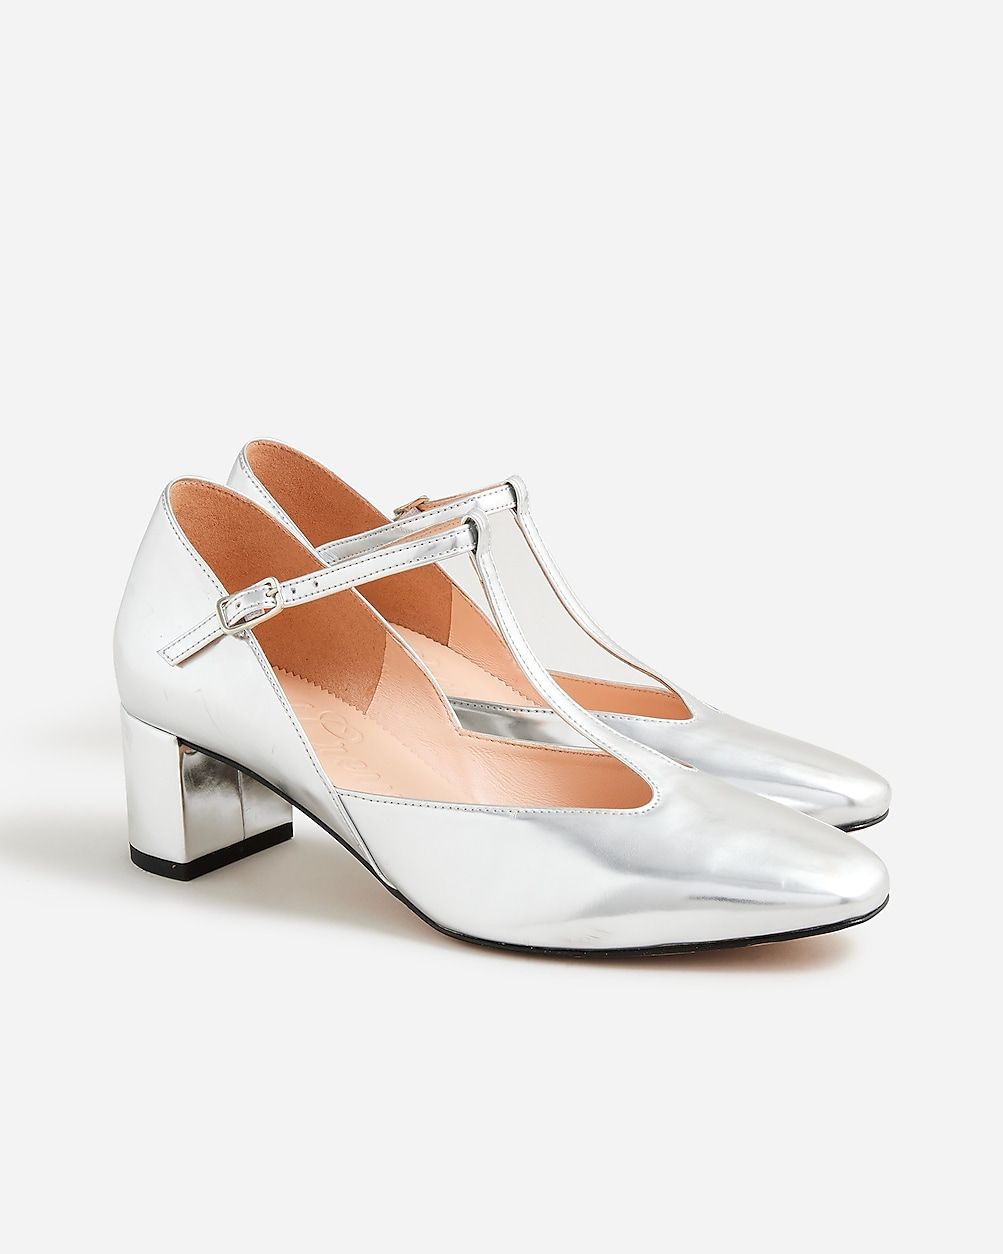 Millie T-strap heels in metallic leather | J.Crew US